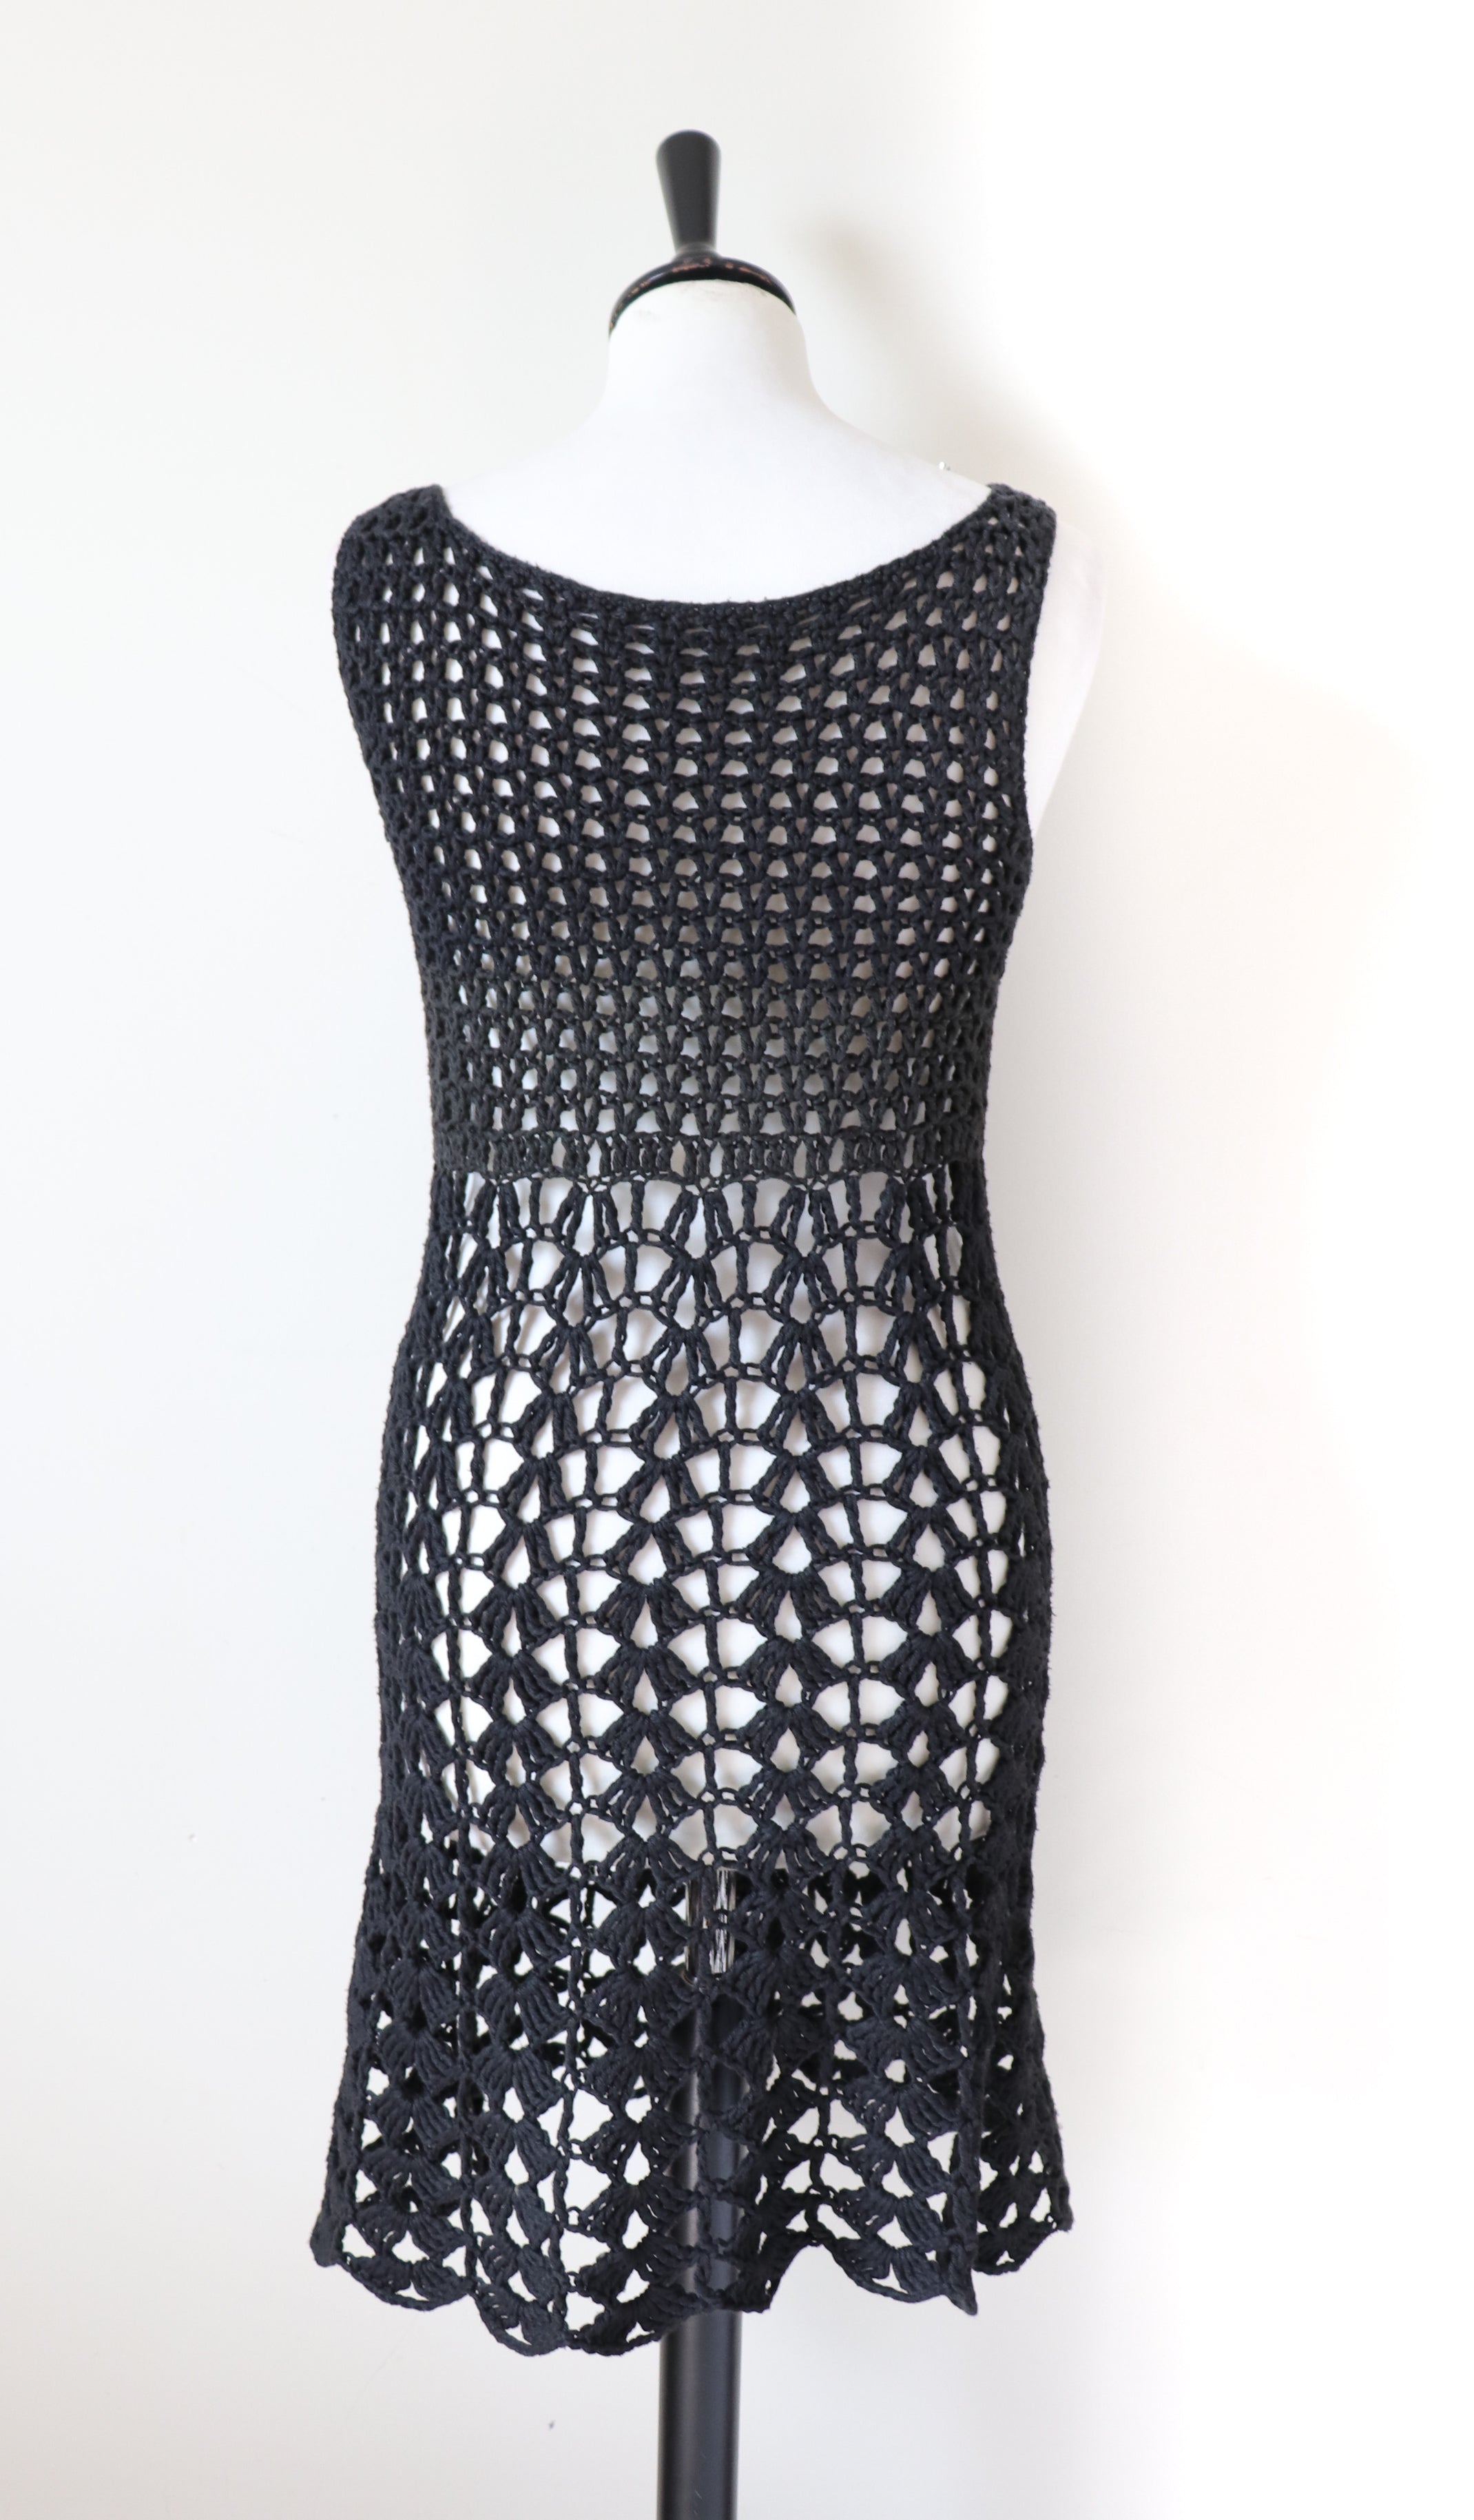 Crochet Knit Vintage Mini Dress - Black - Empire waist - Fit S / UK 10